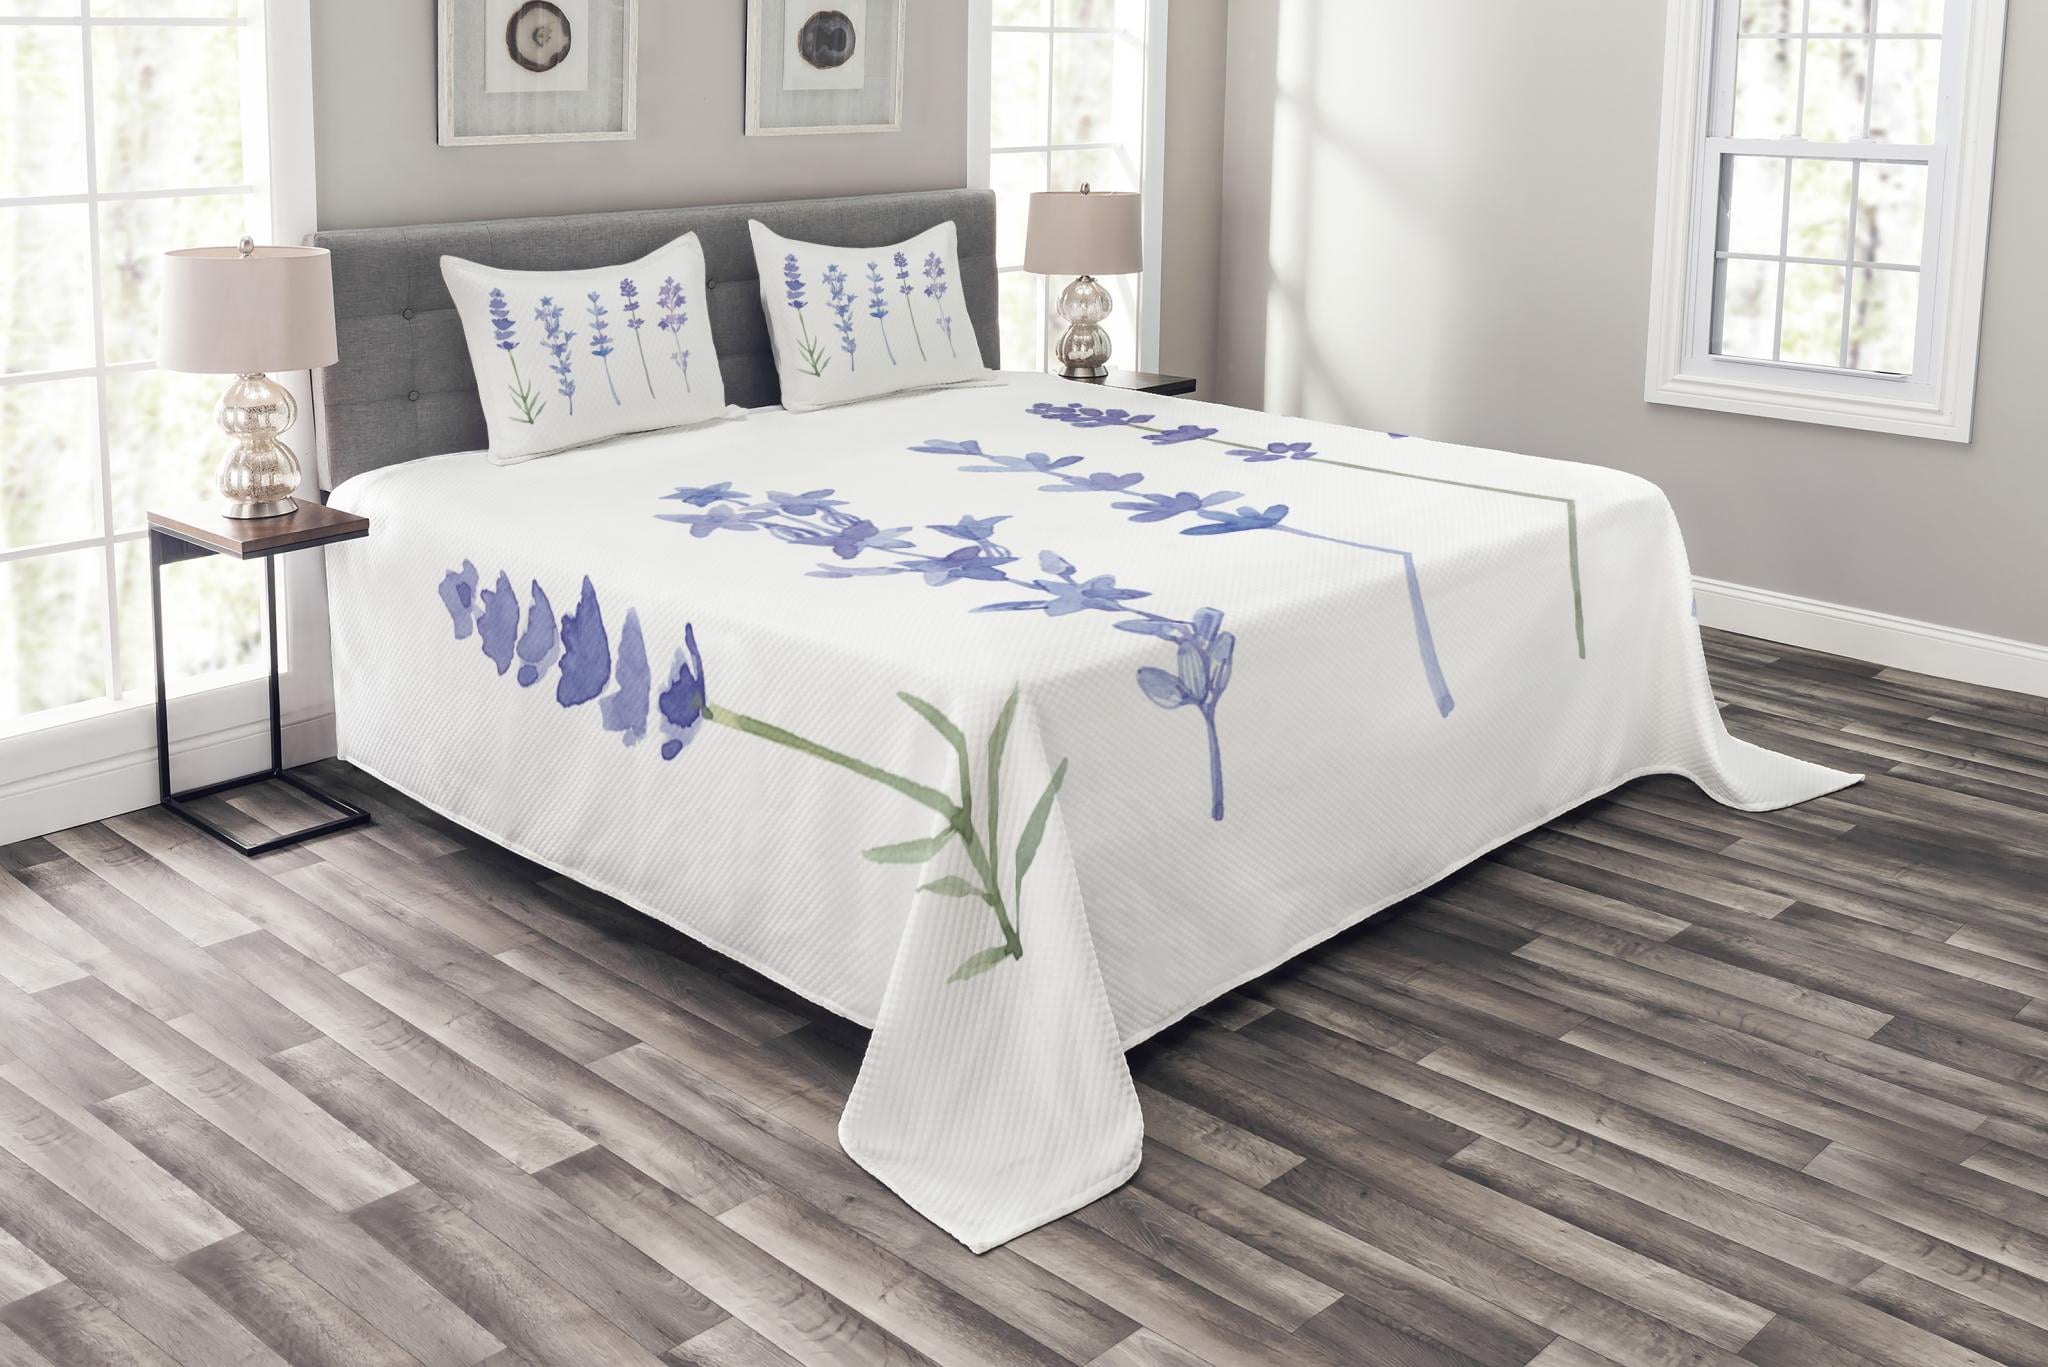 Details about   Lavender Quilted Bedspread & Pillow Shams Set Watercolor Art Plant Print 